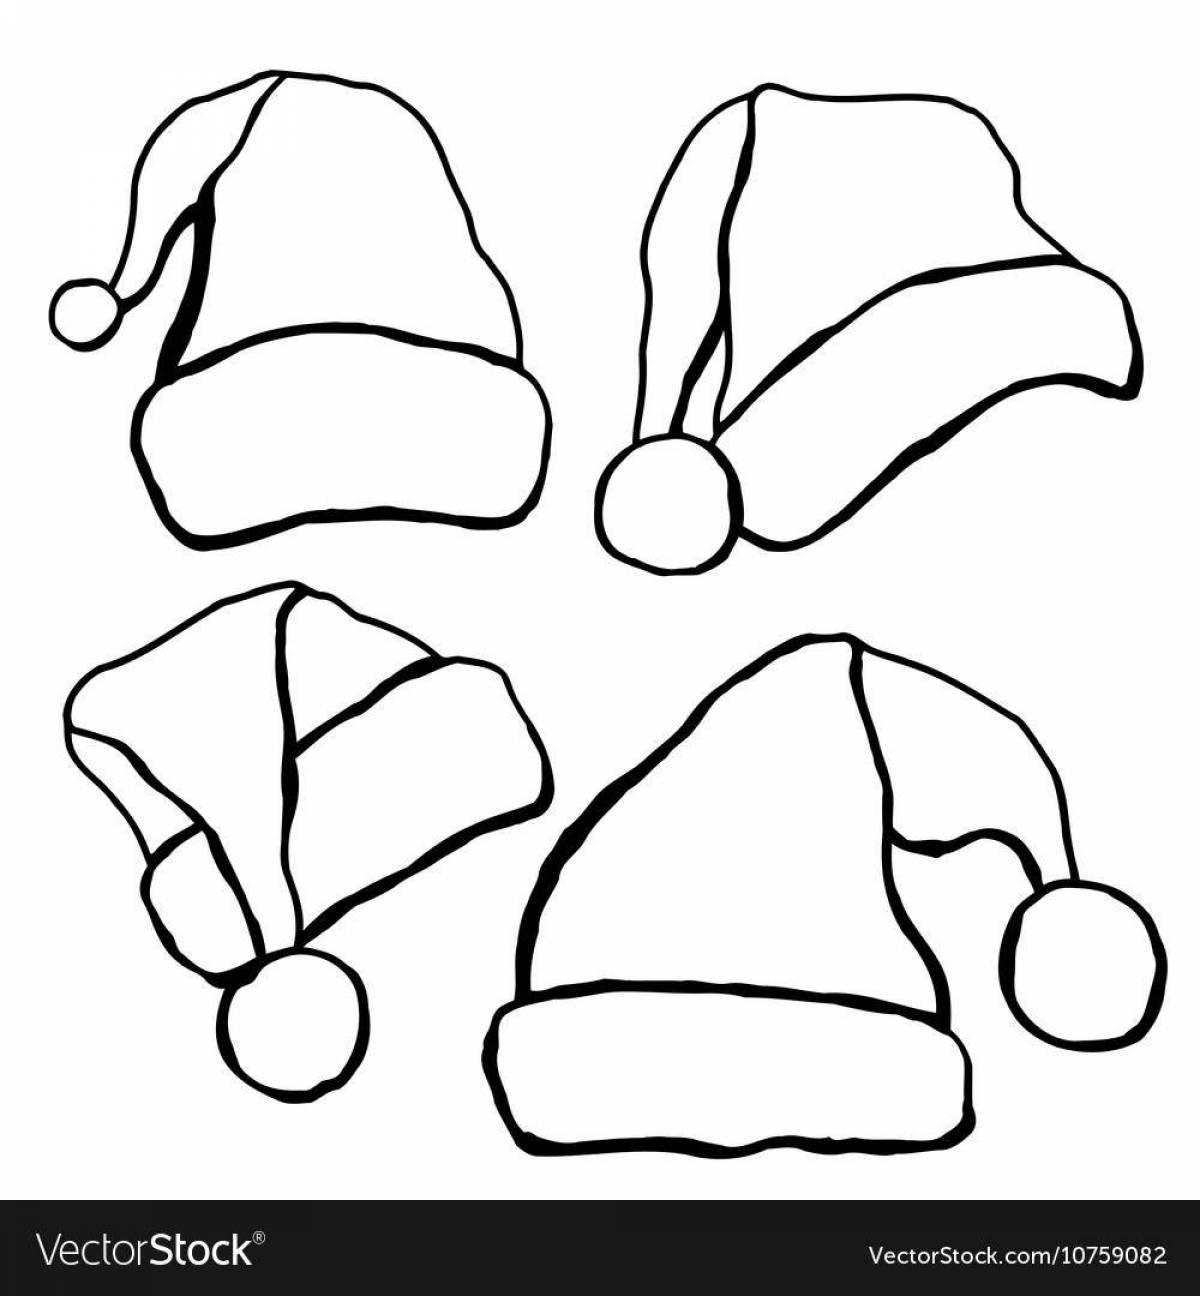 Santa Claus glowing hat coloring page